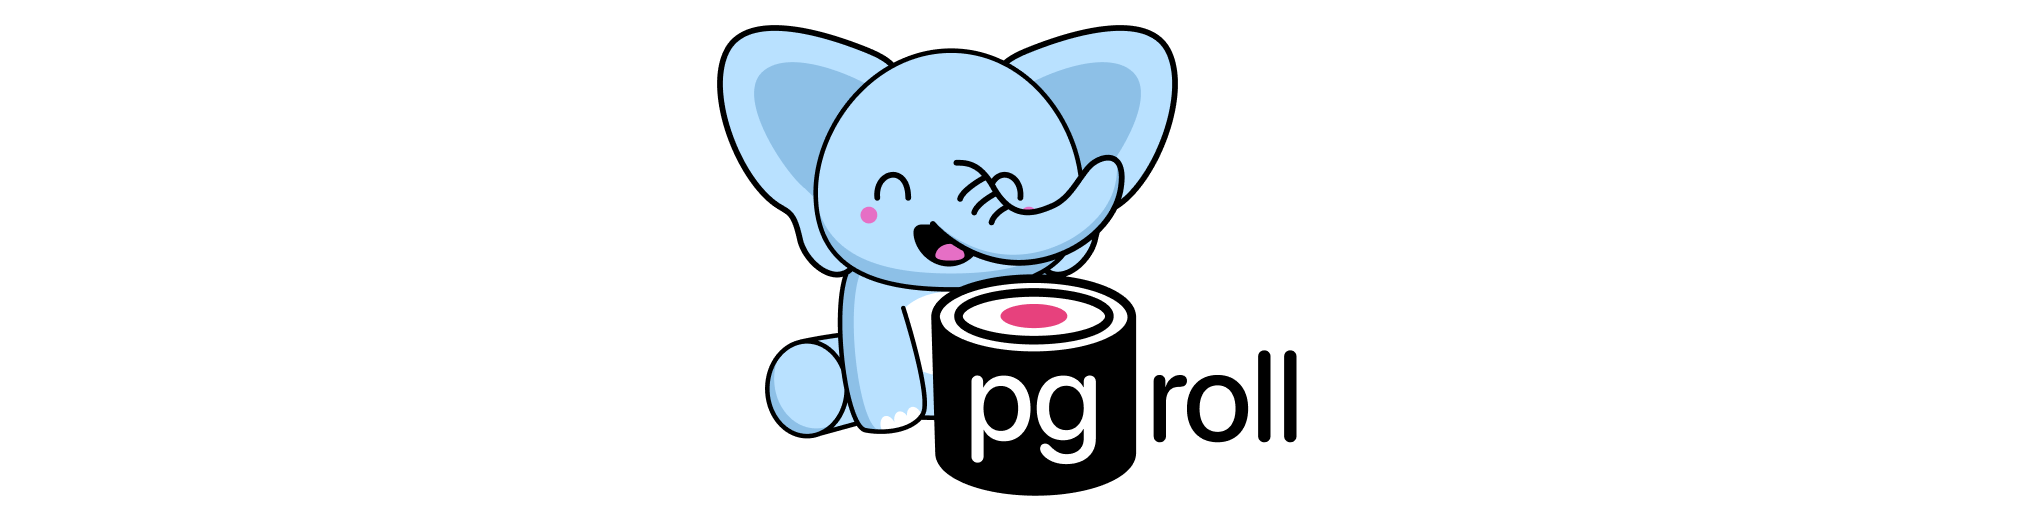 pgroll logo